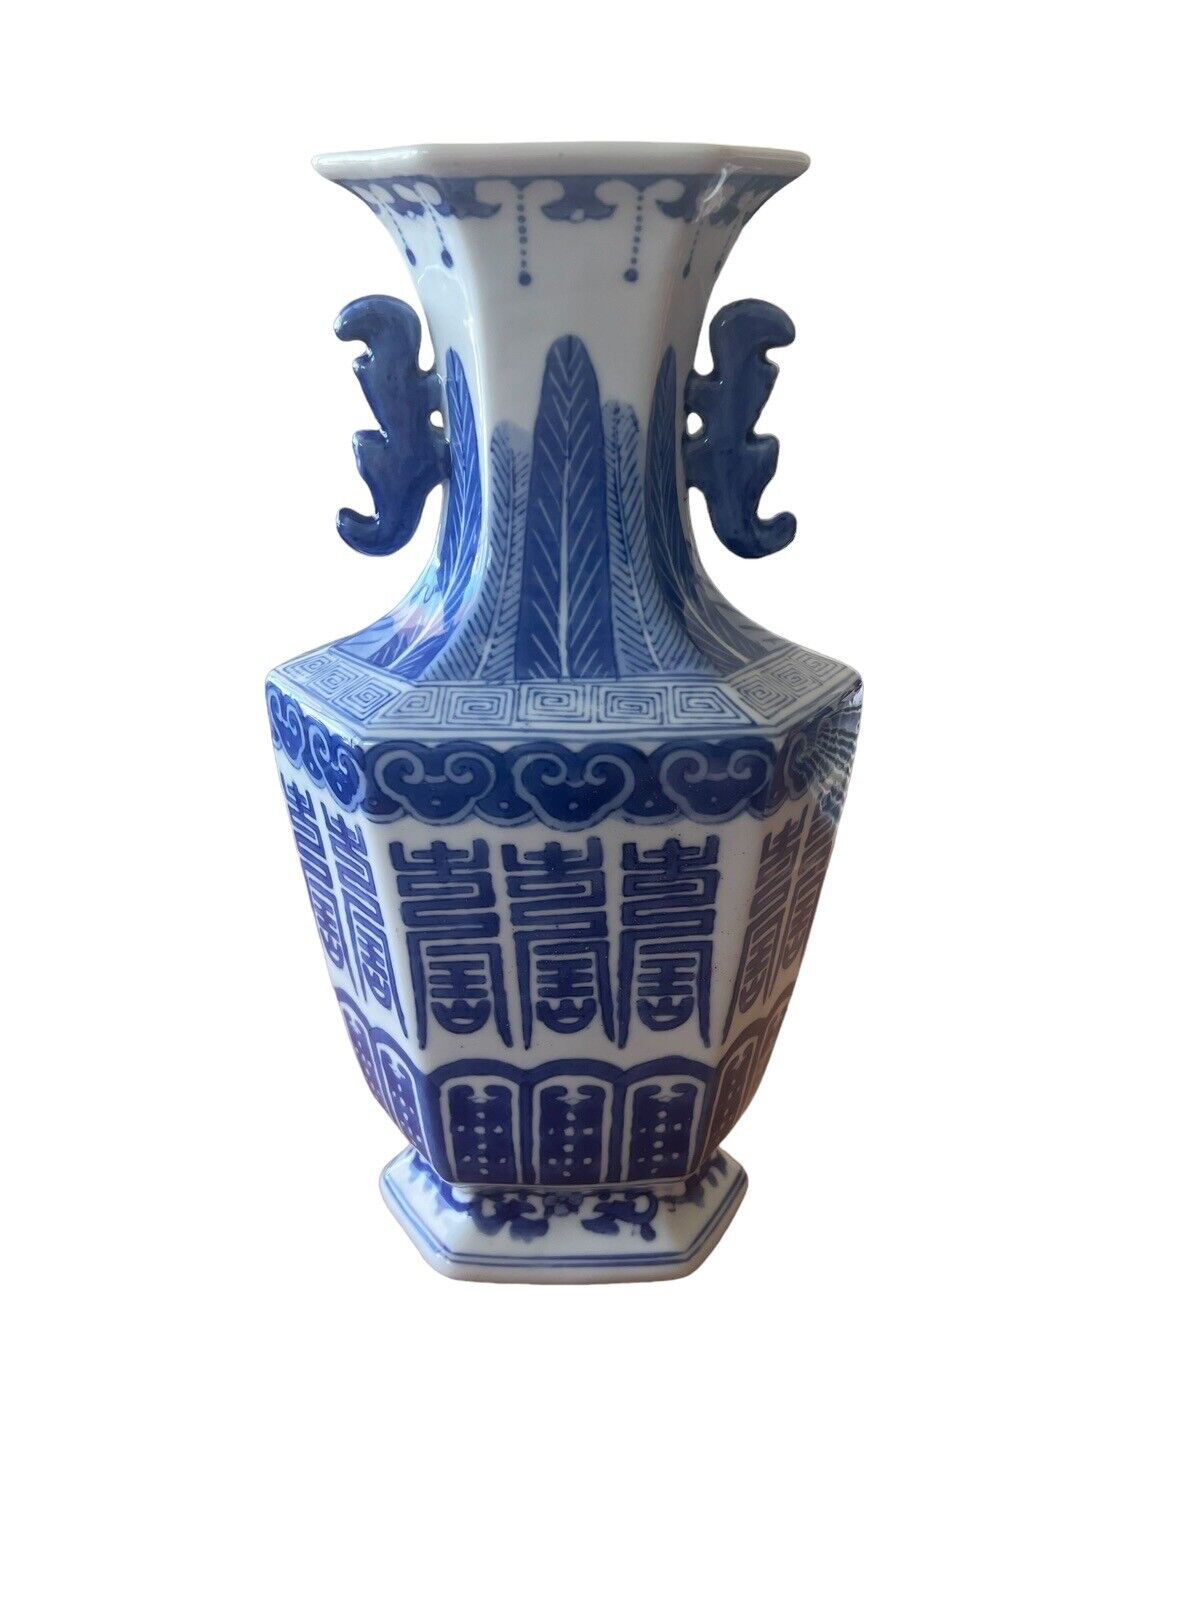 Decorative Blue And White Ceramic Vase, Unmarked, Asian Origin